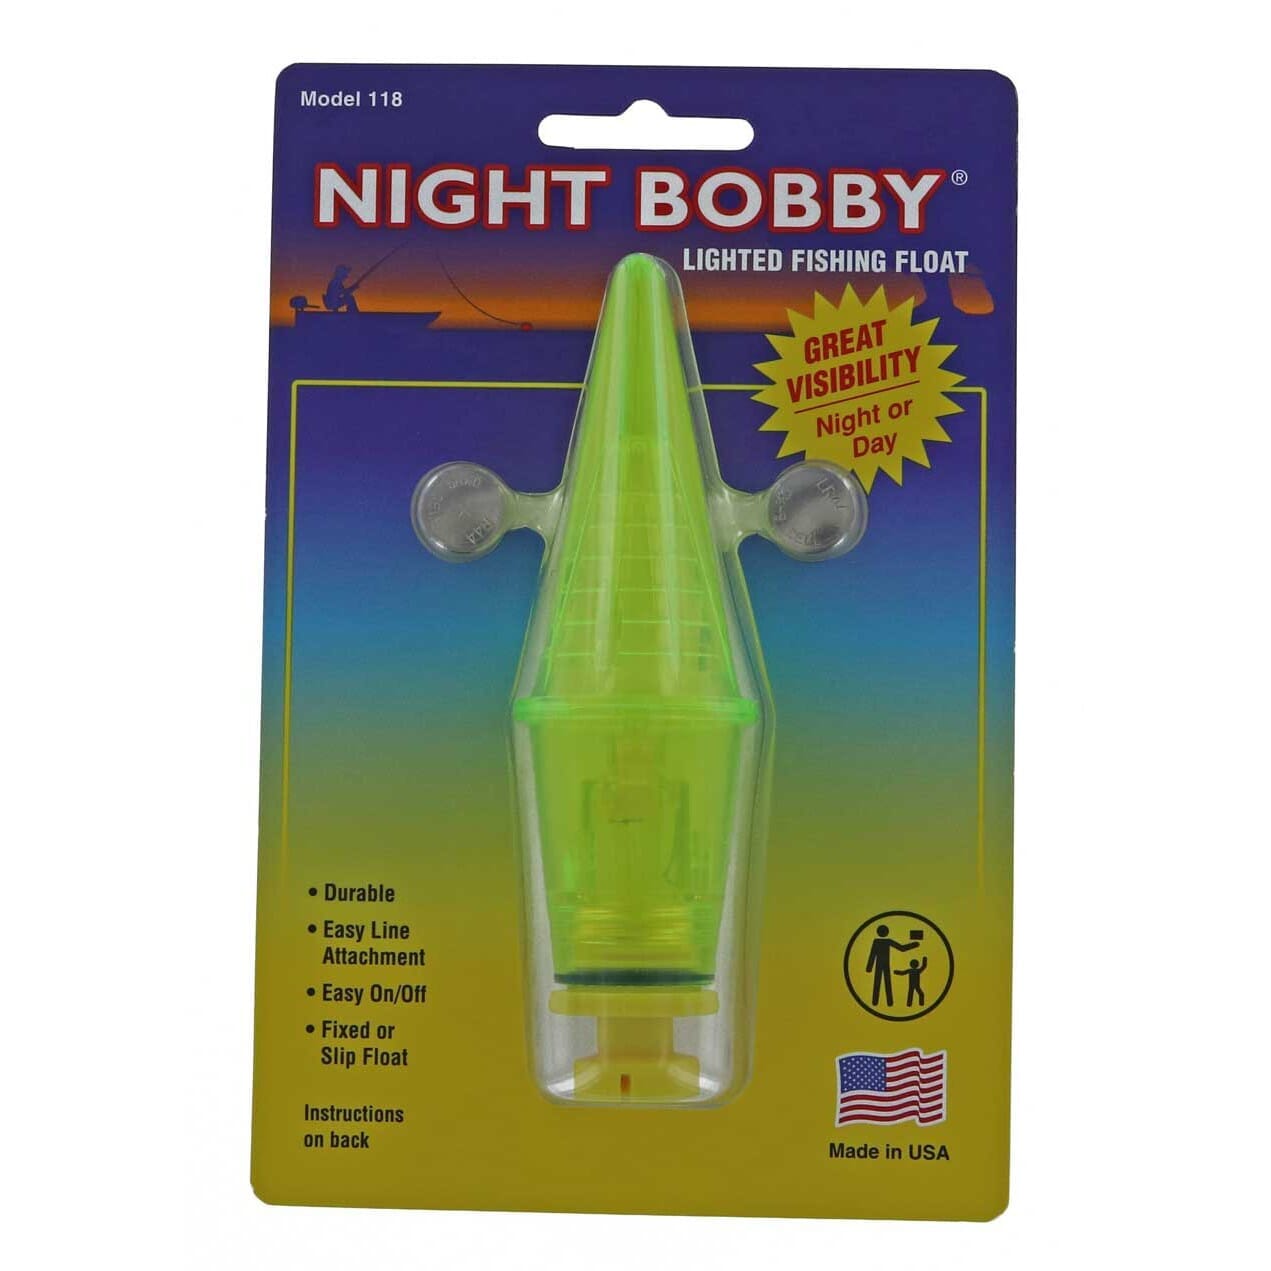 Night Bobby Lighted Fishing Float